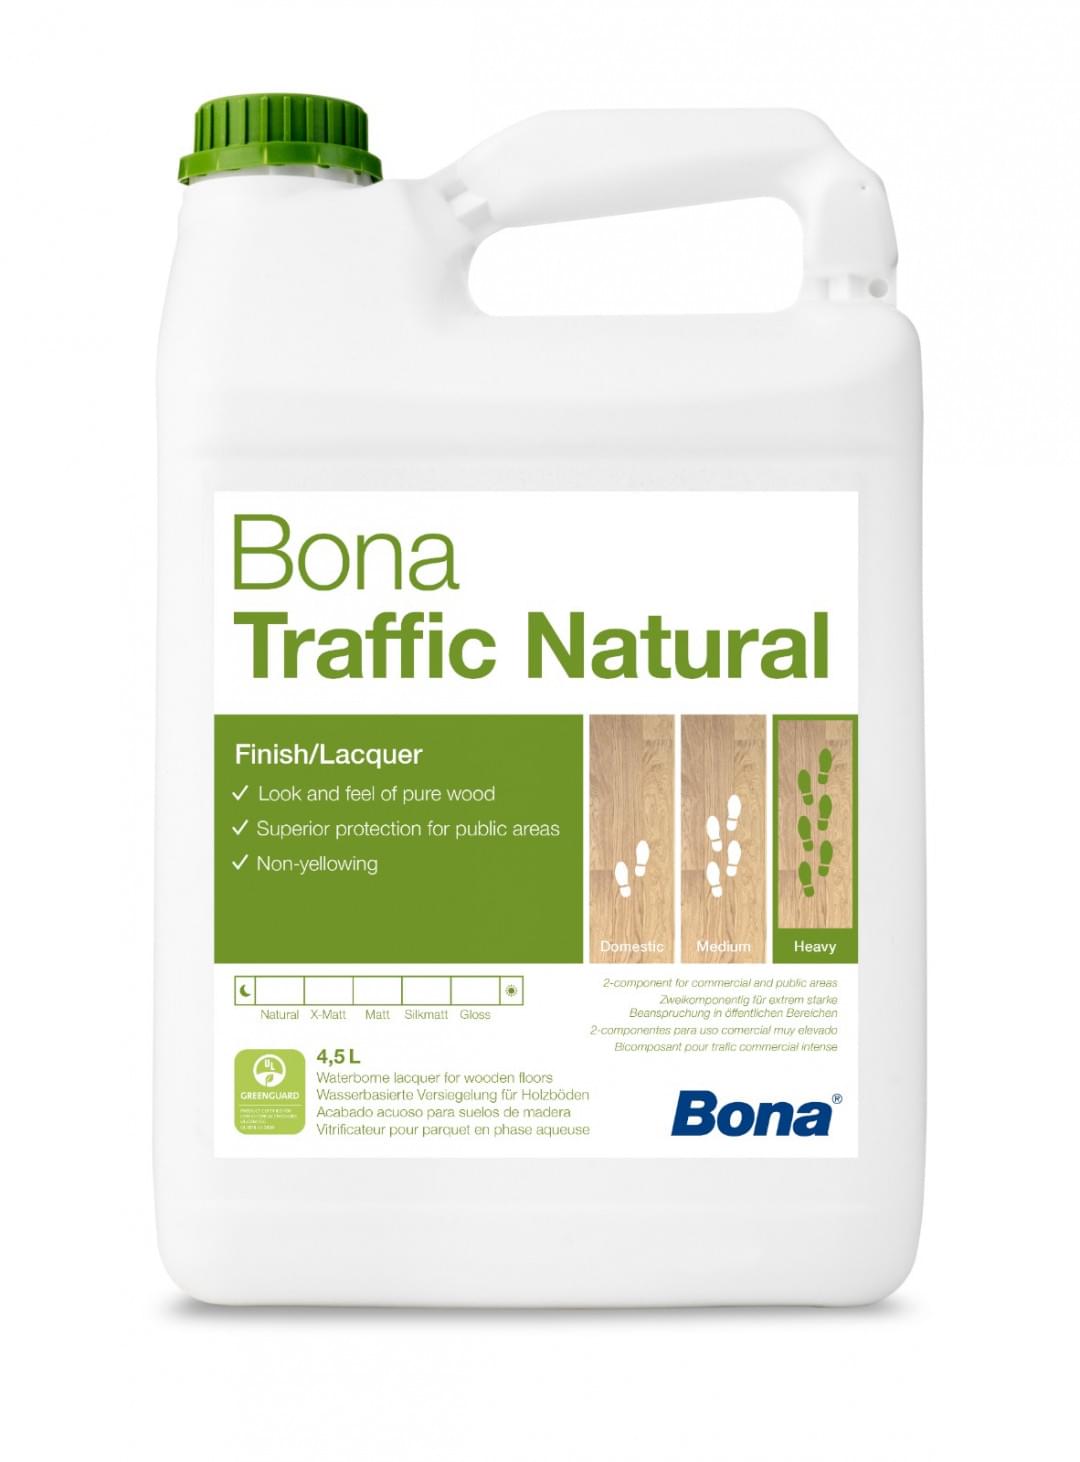 Traffic Natural from Bona